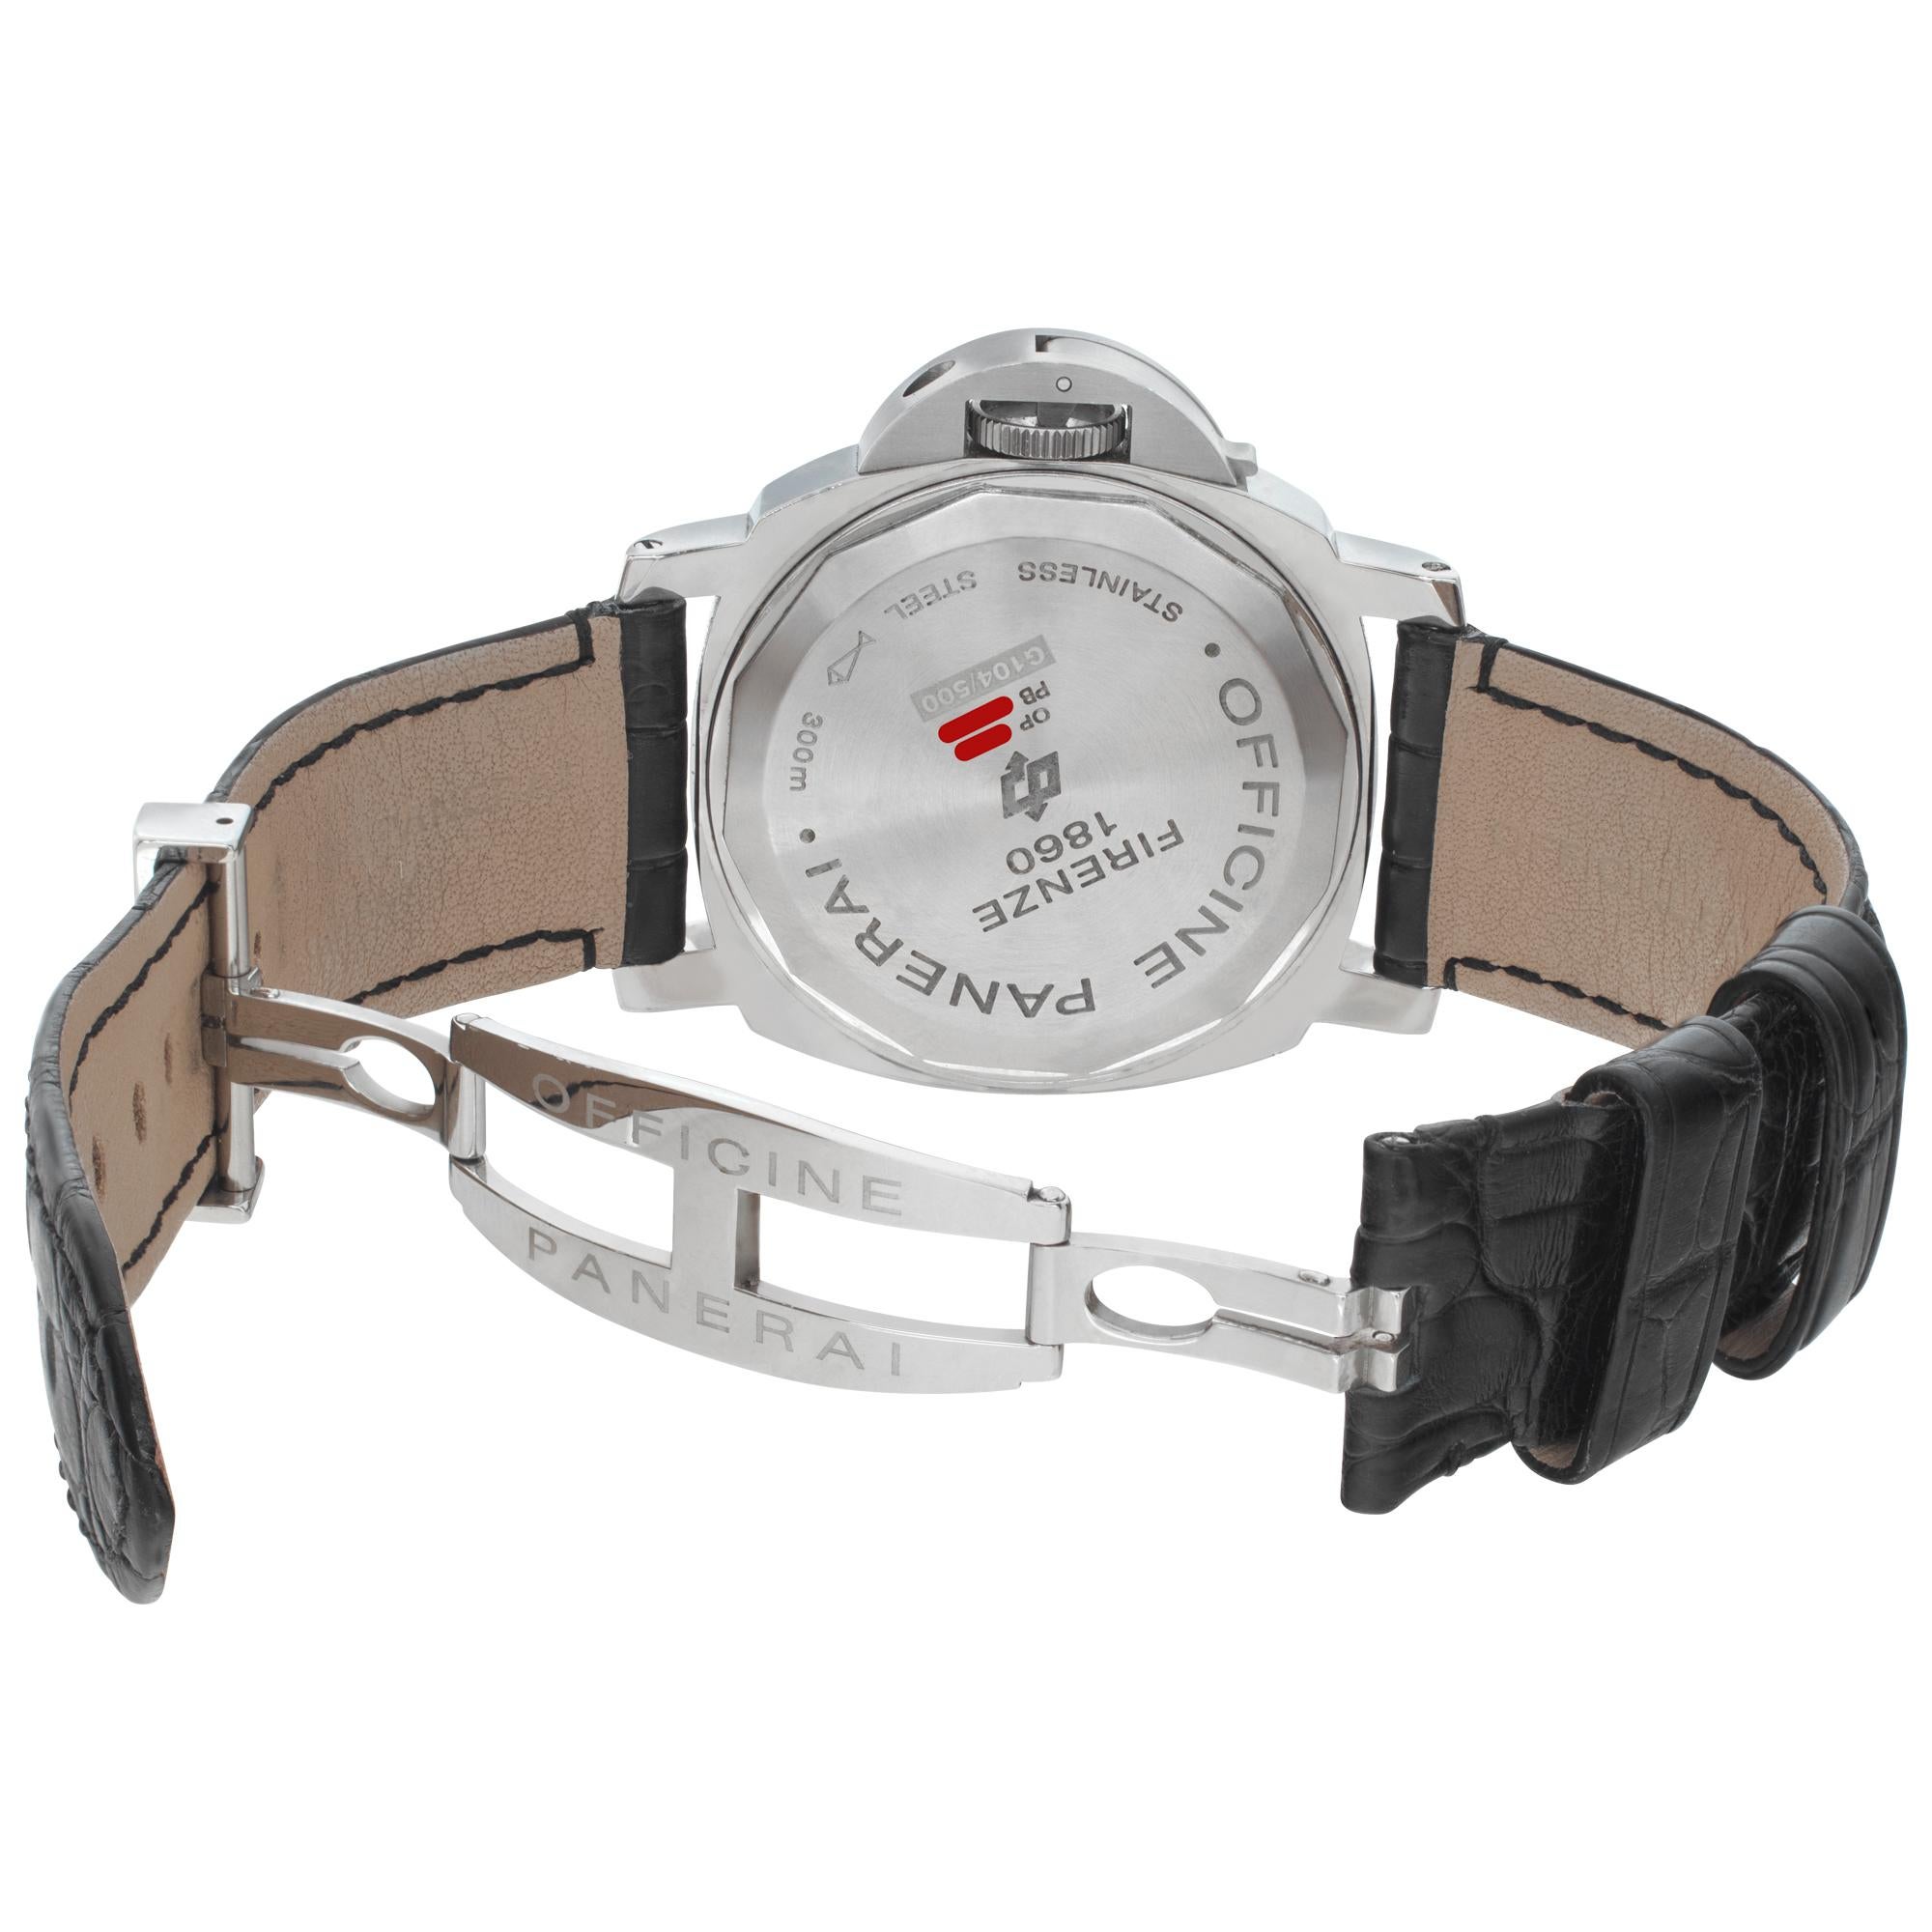 Men's Panerai Luminor stainless steel Manual Wristwatch PAM000 For Sale